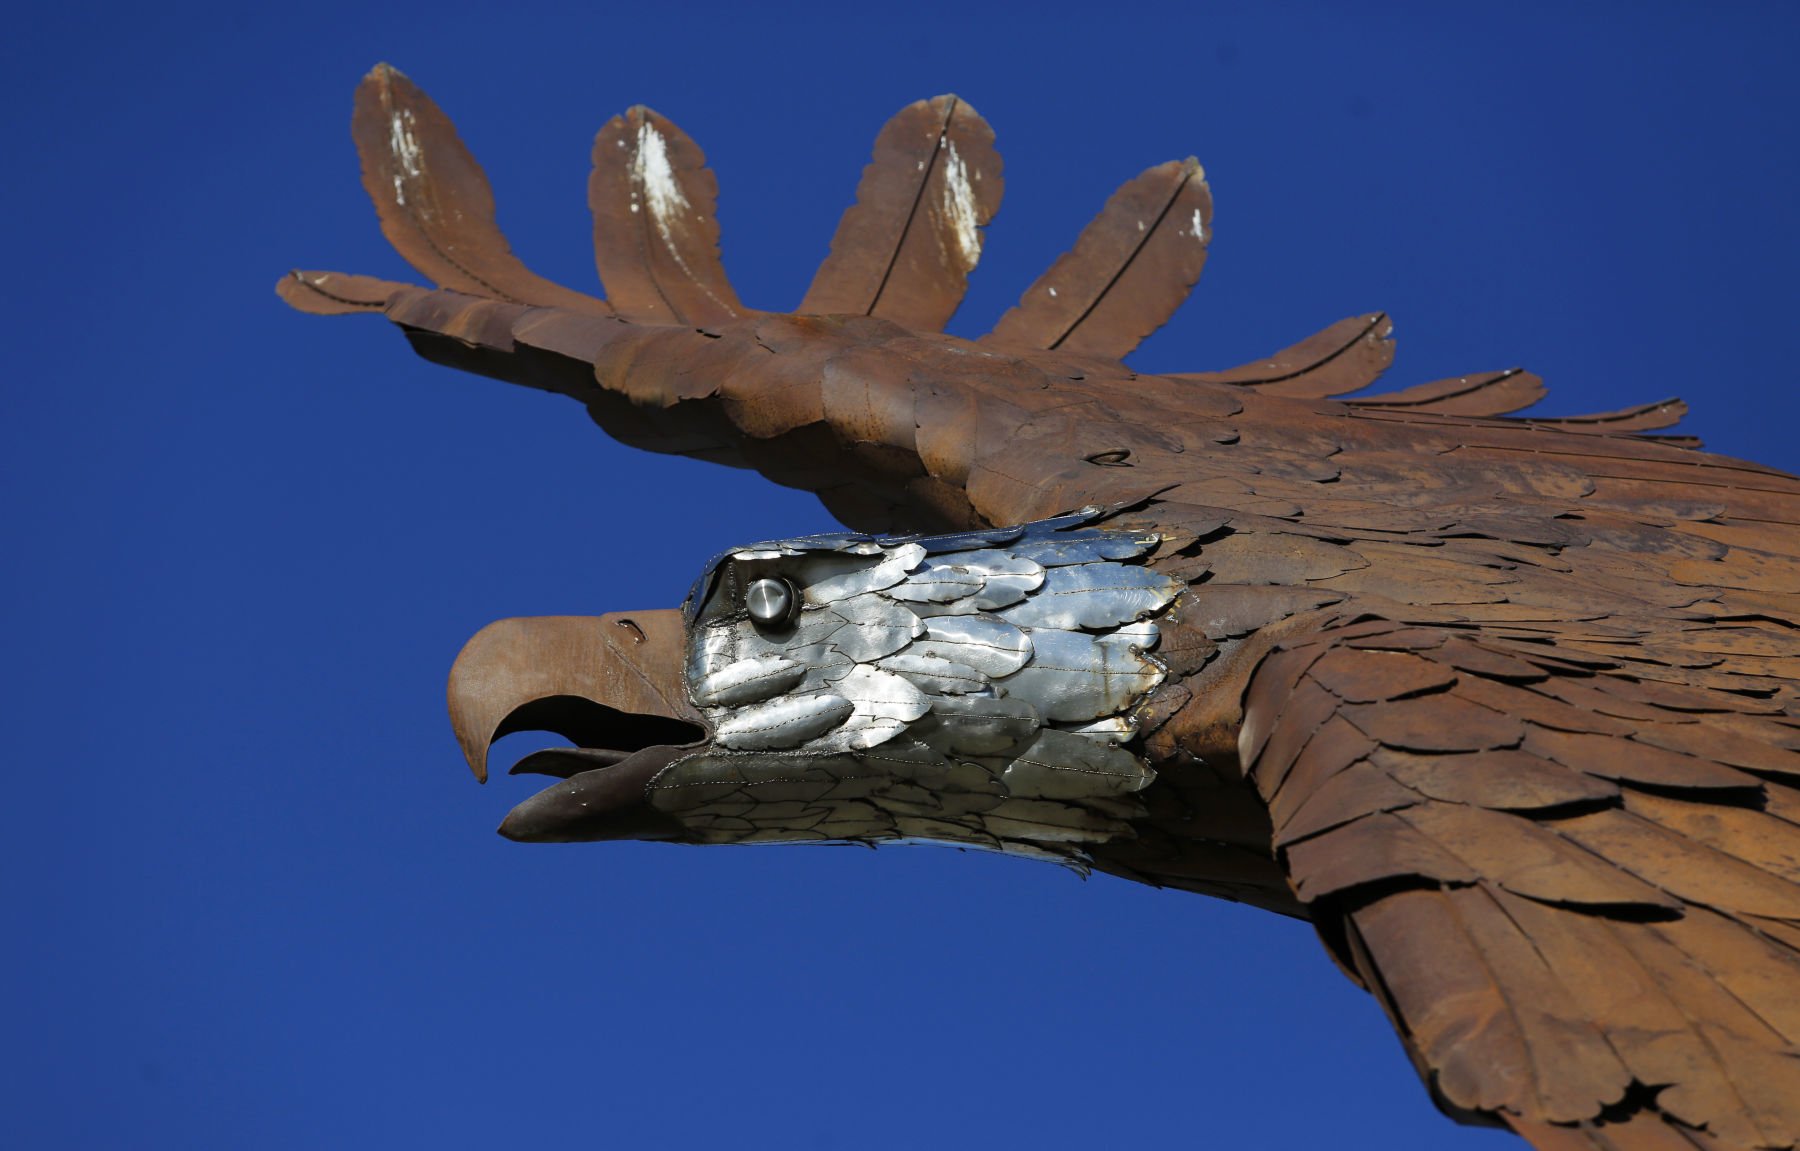 Eagle Sculpture TotemWWD6567387232Mill Creek Studios